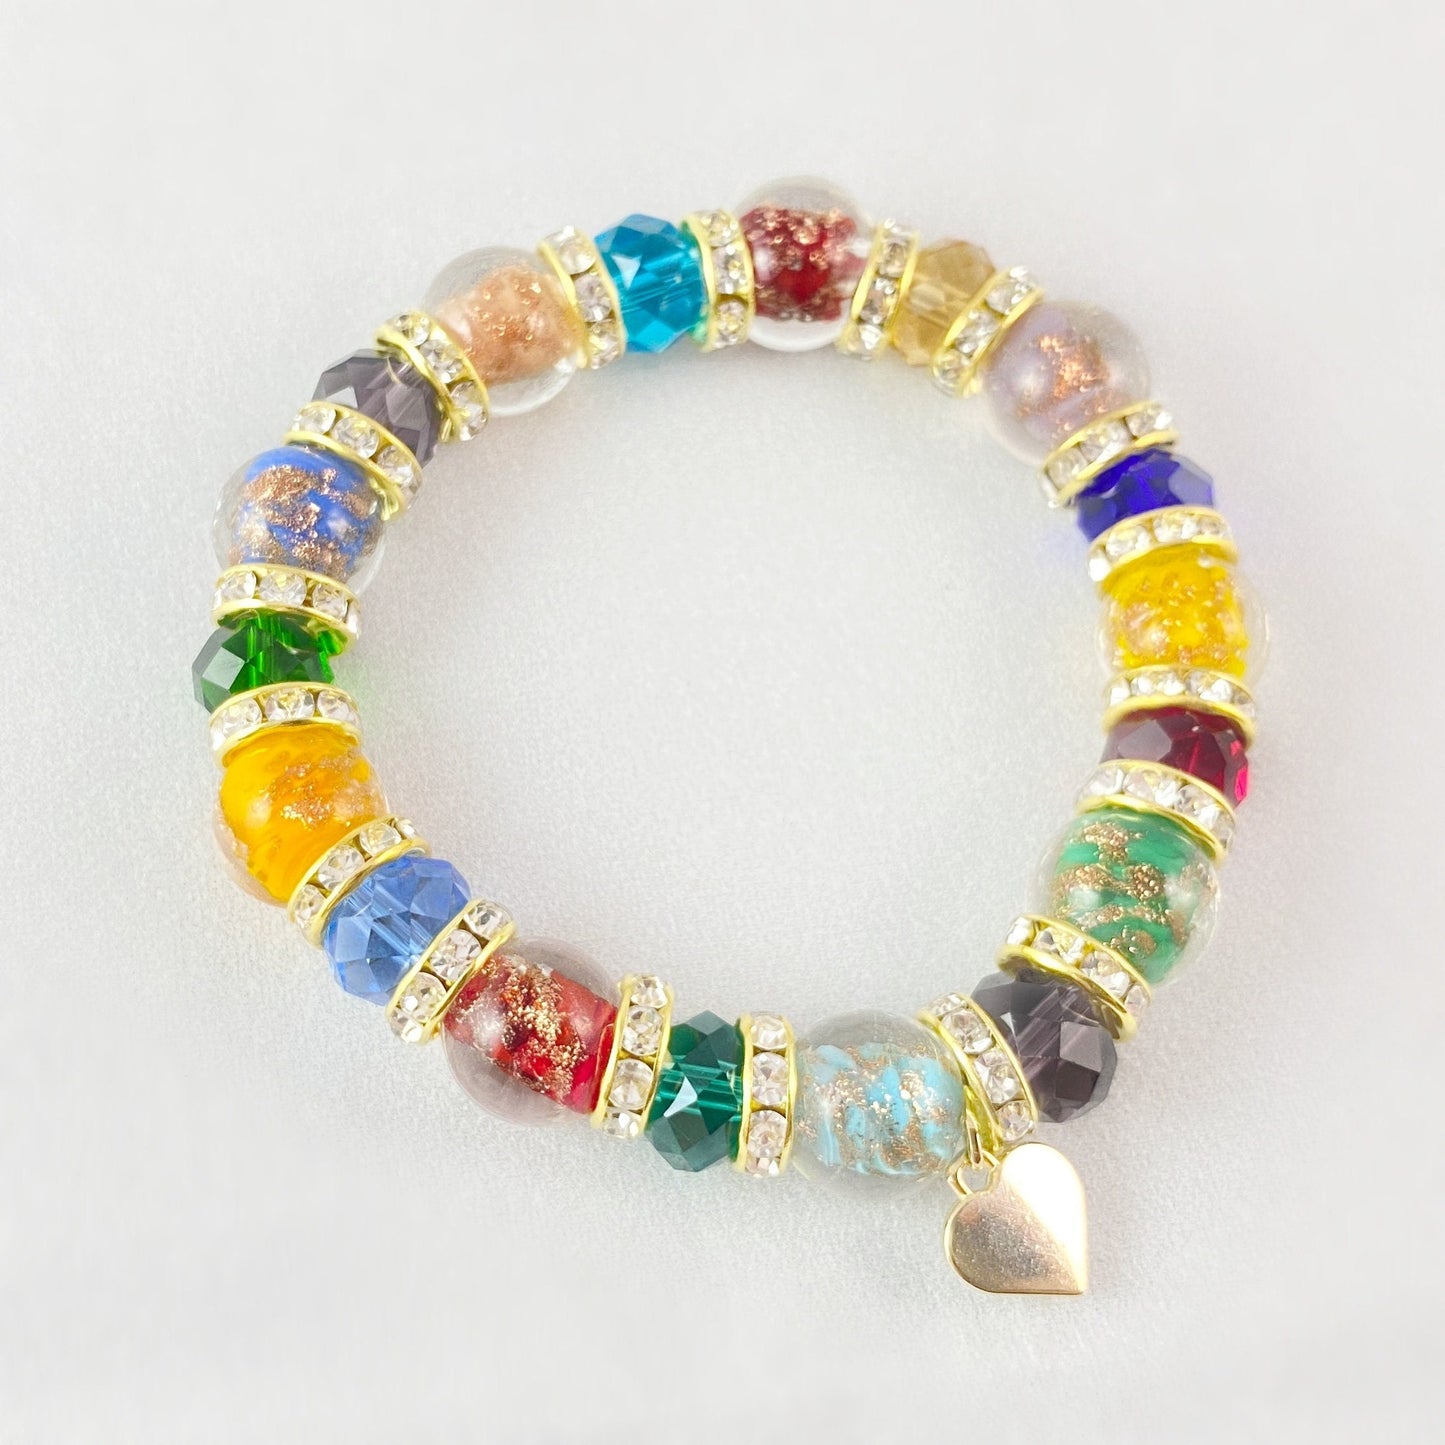 Rainbow Beaded Venetian Glass Bracelet - Handmade in Italy, Colorful Murano Glass